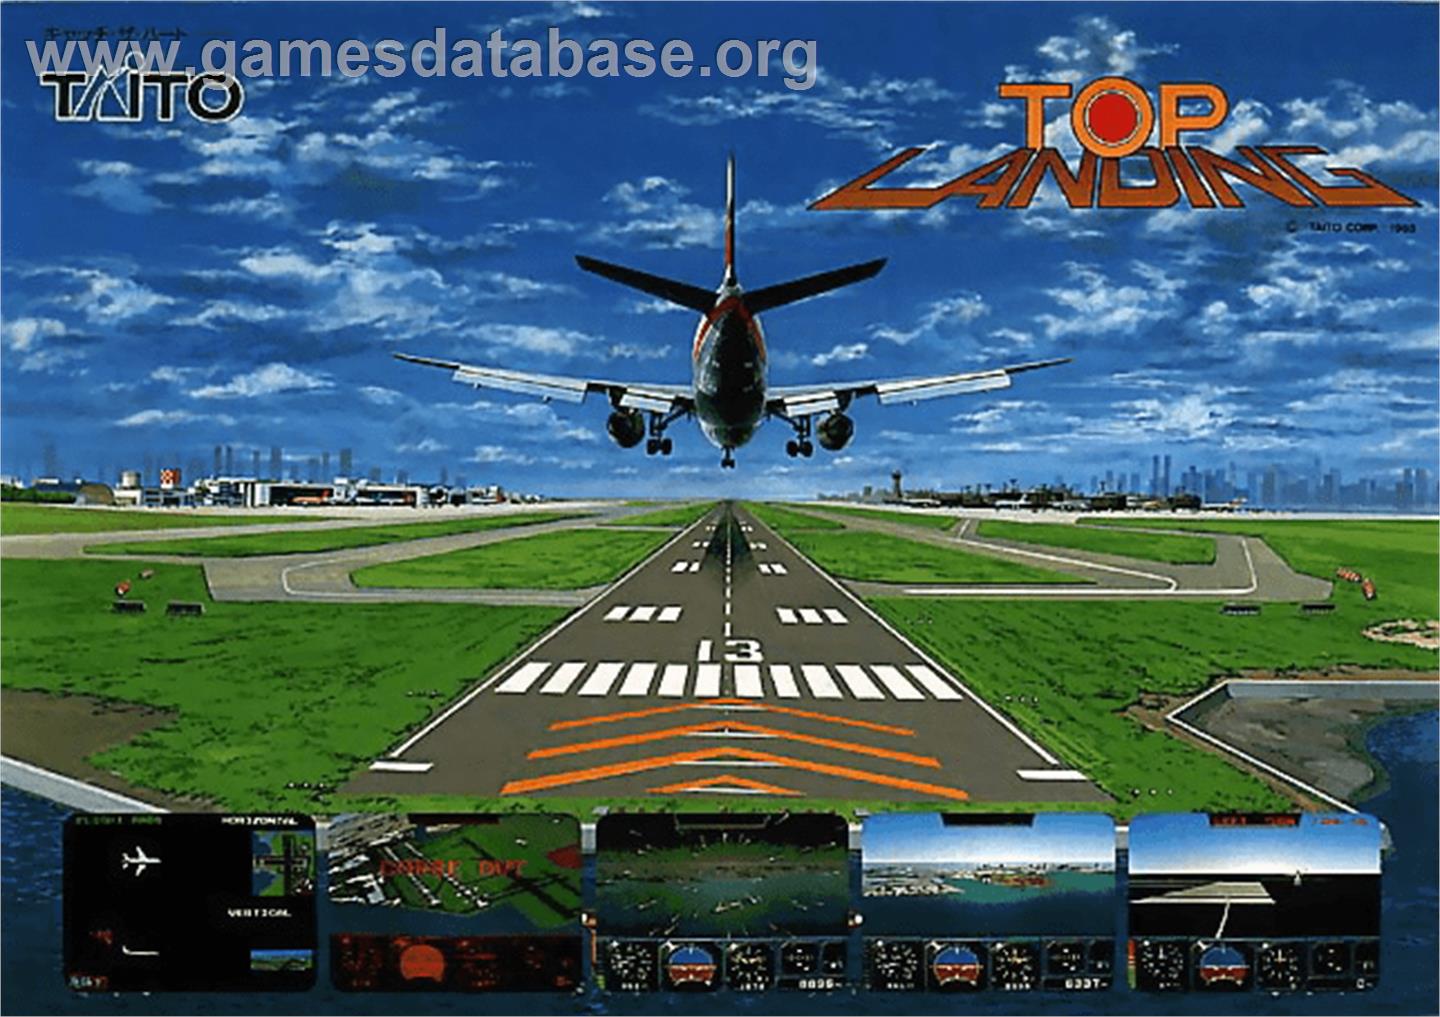 Top Landing - Arcade - Artwork - Advert